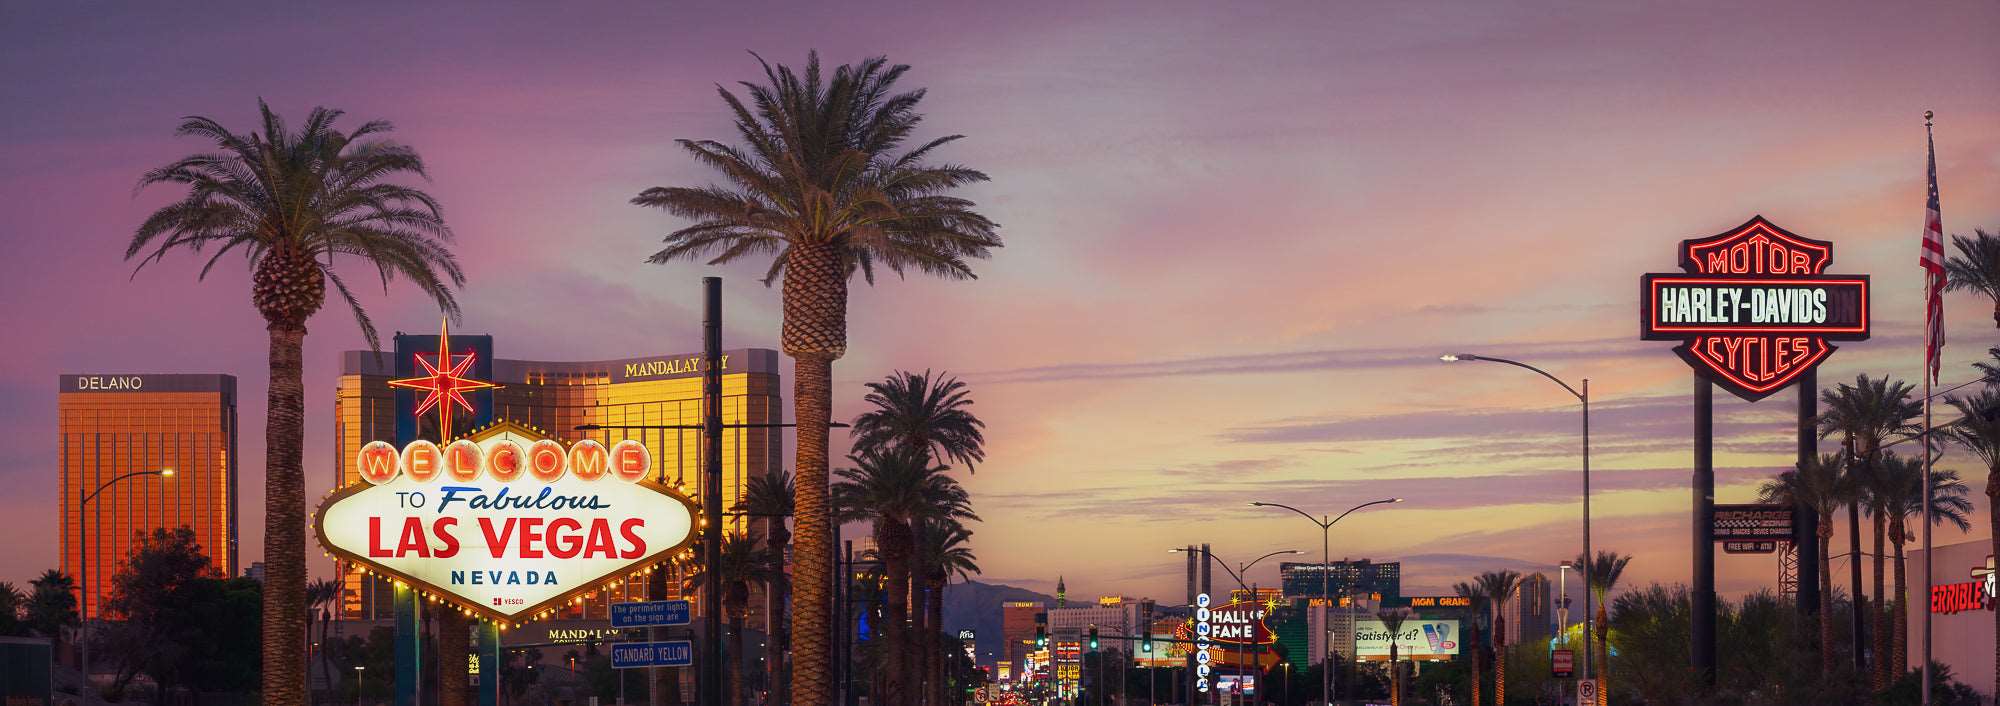 Neon Mirage: Sunset Dreams of Las Vegas - Stephen Milner